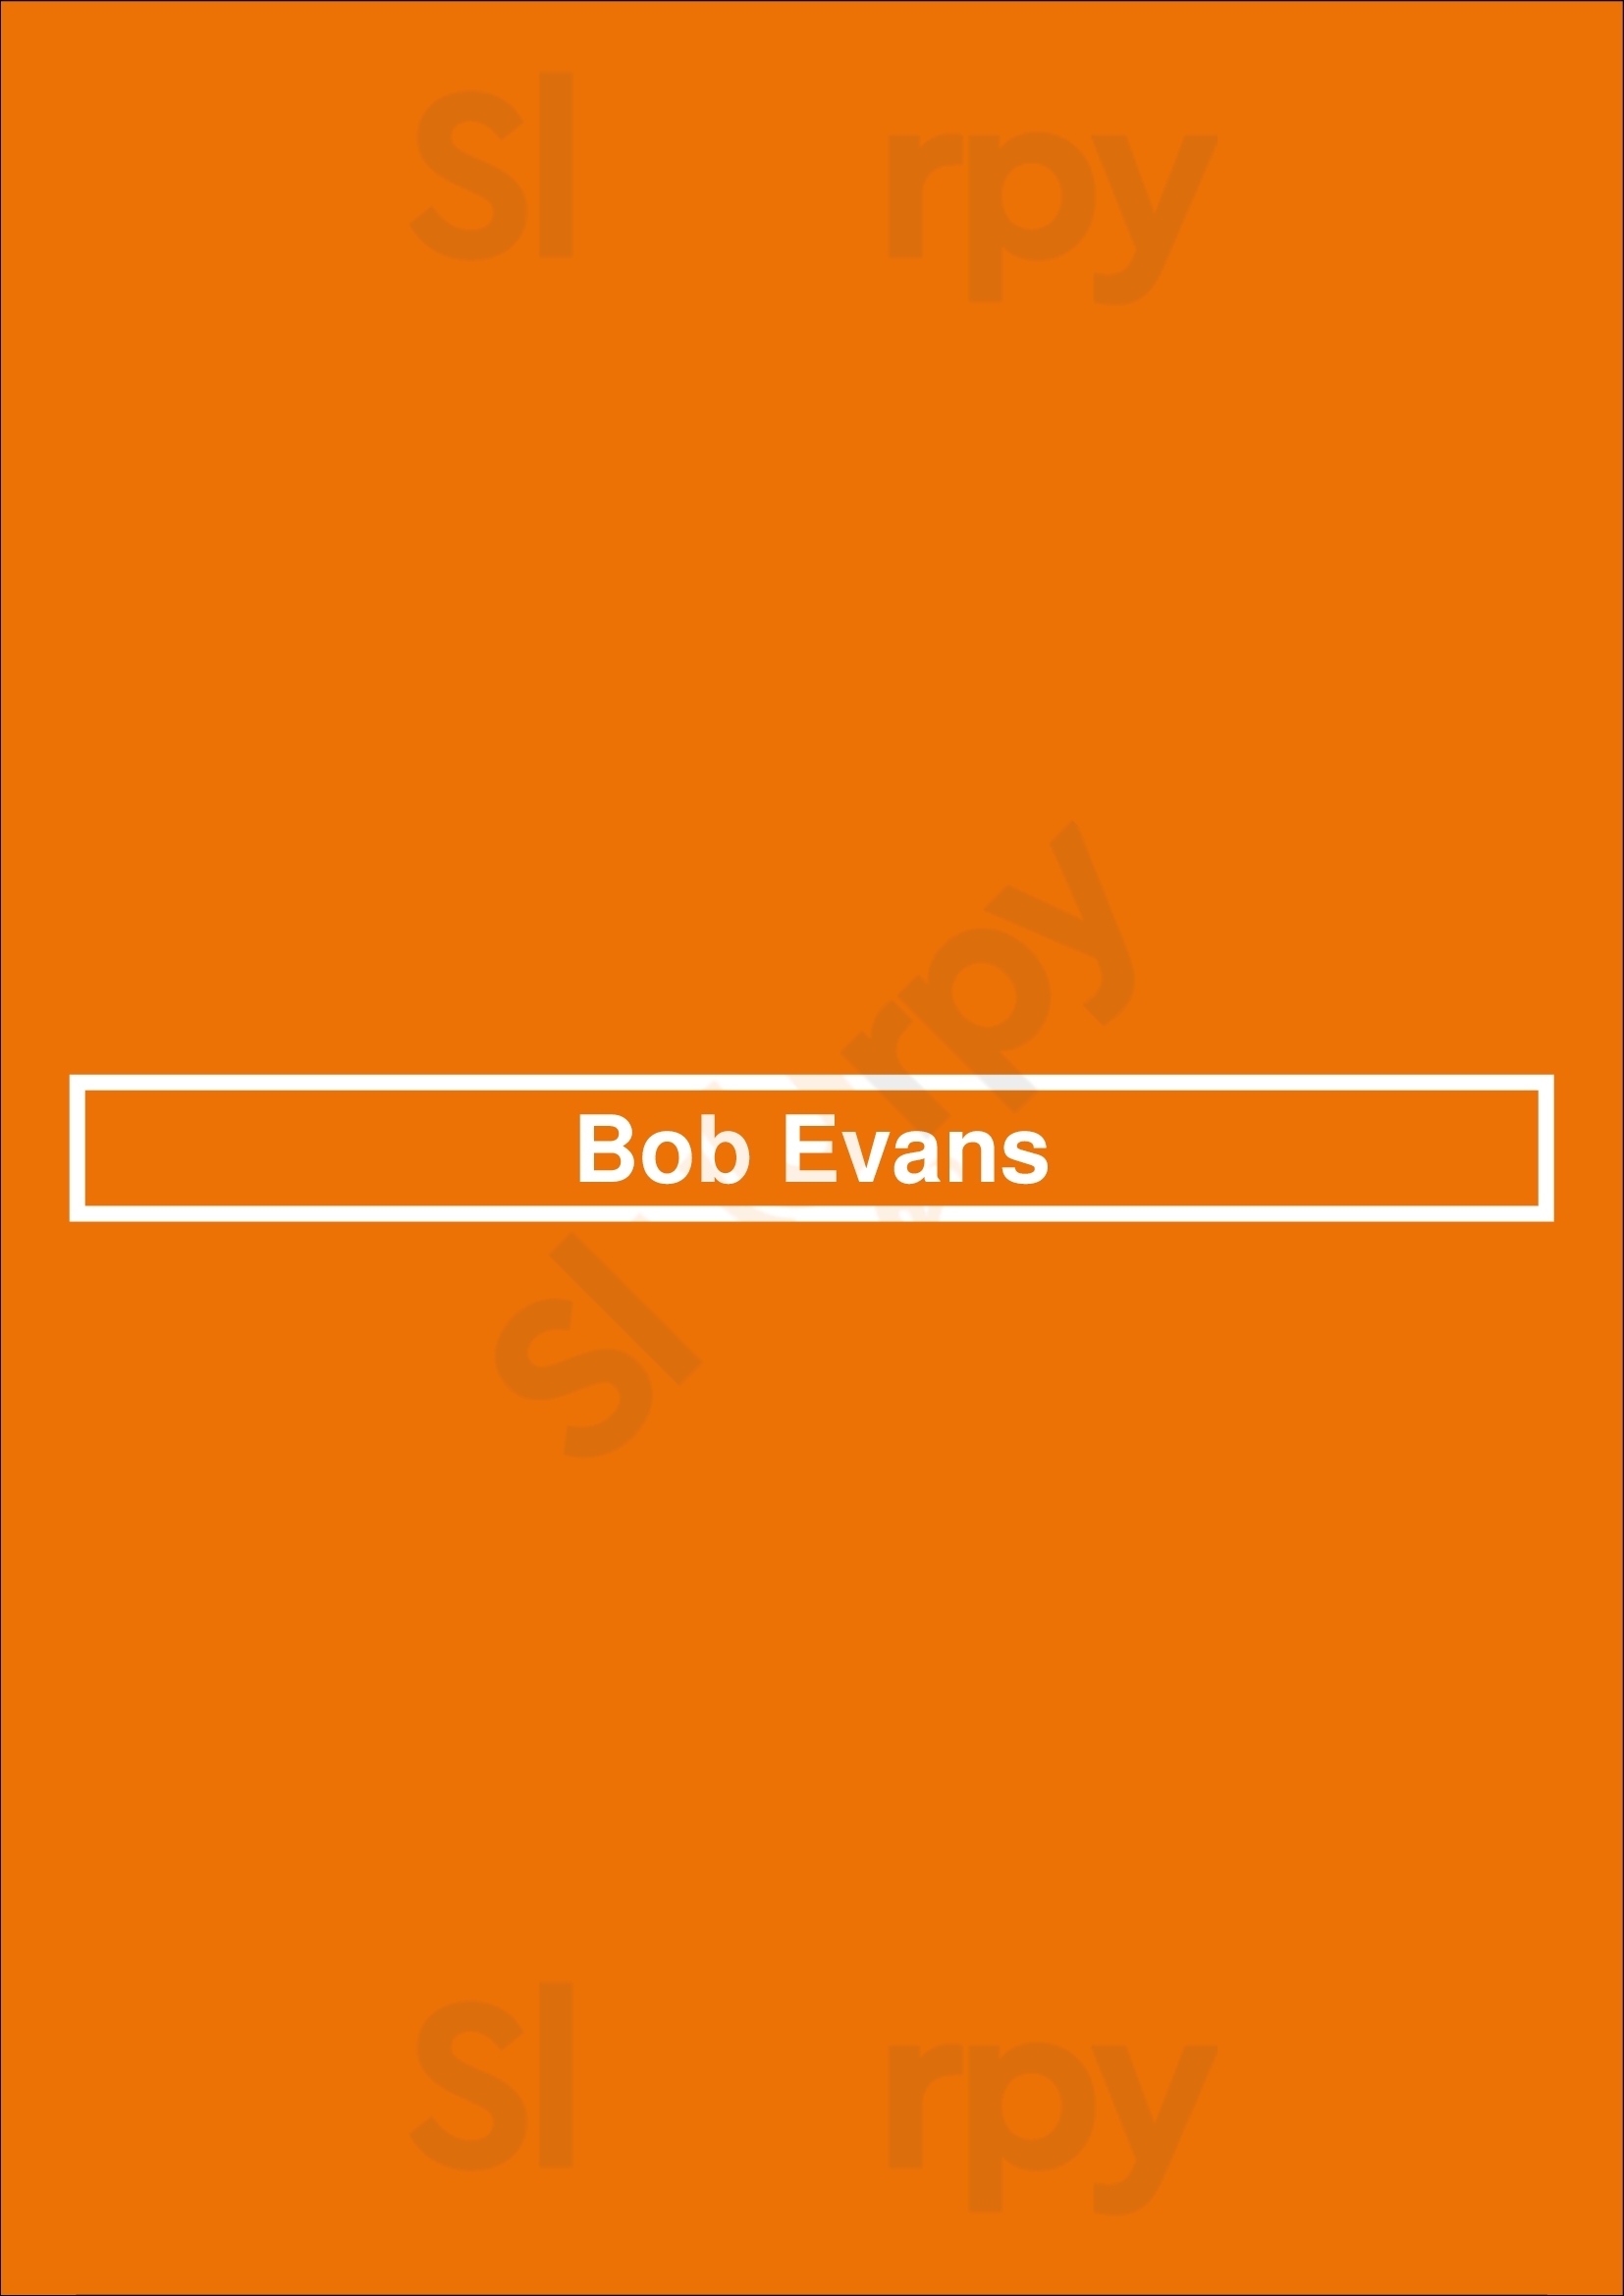 Bob Evans Newark Menu - 1